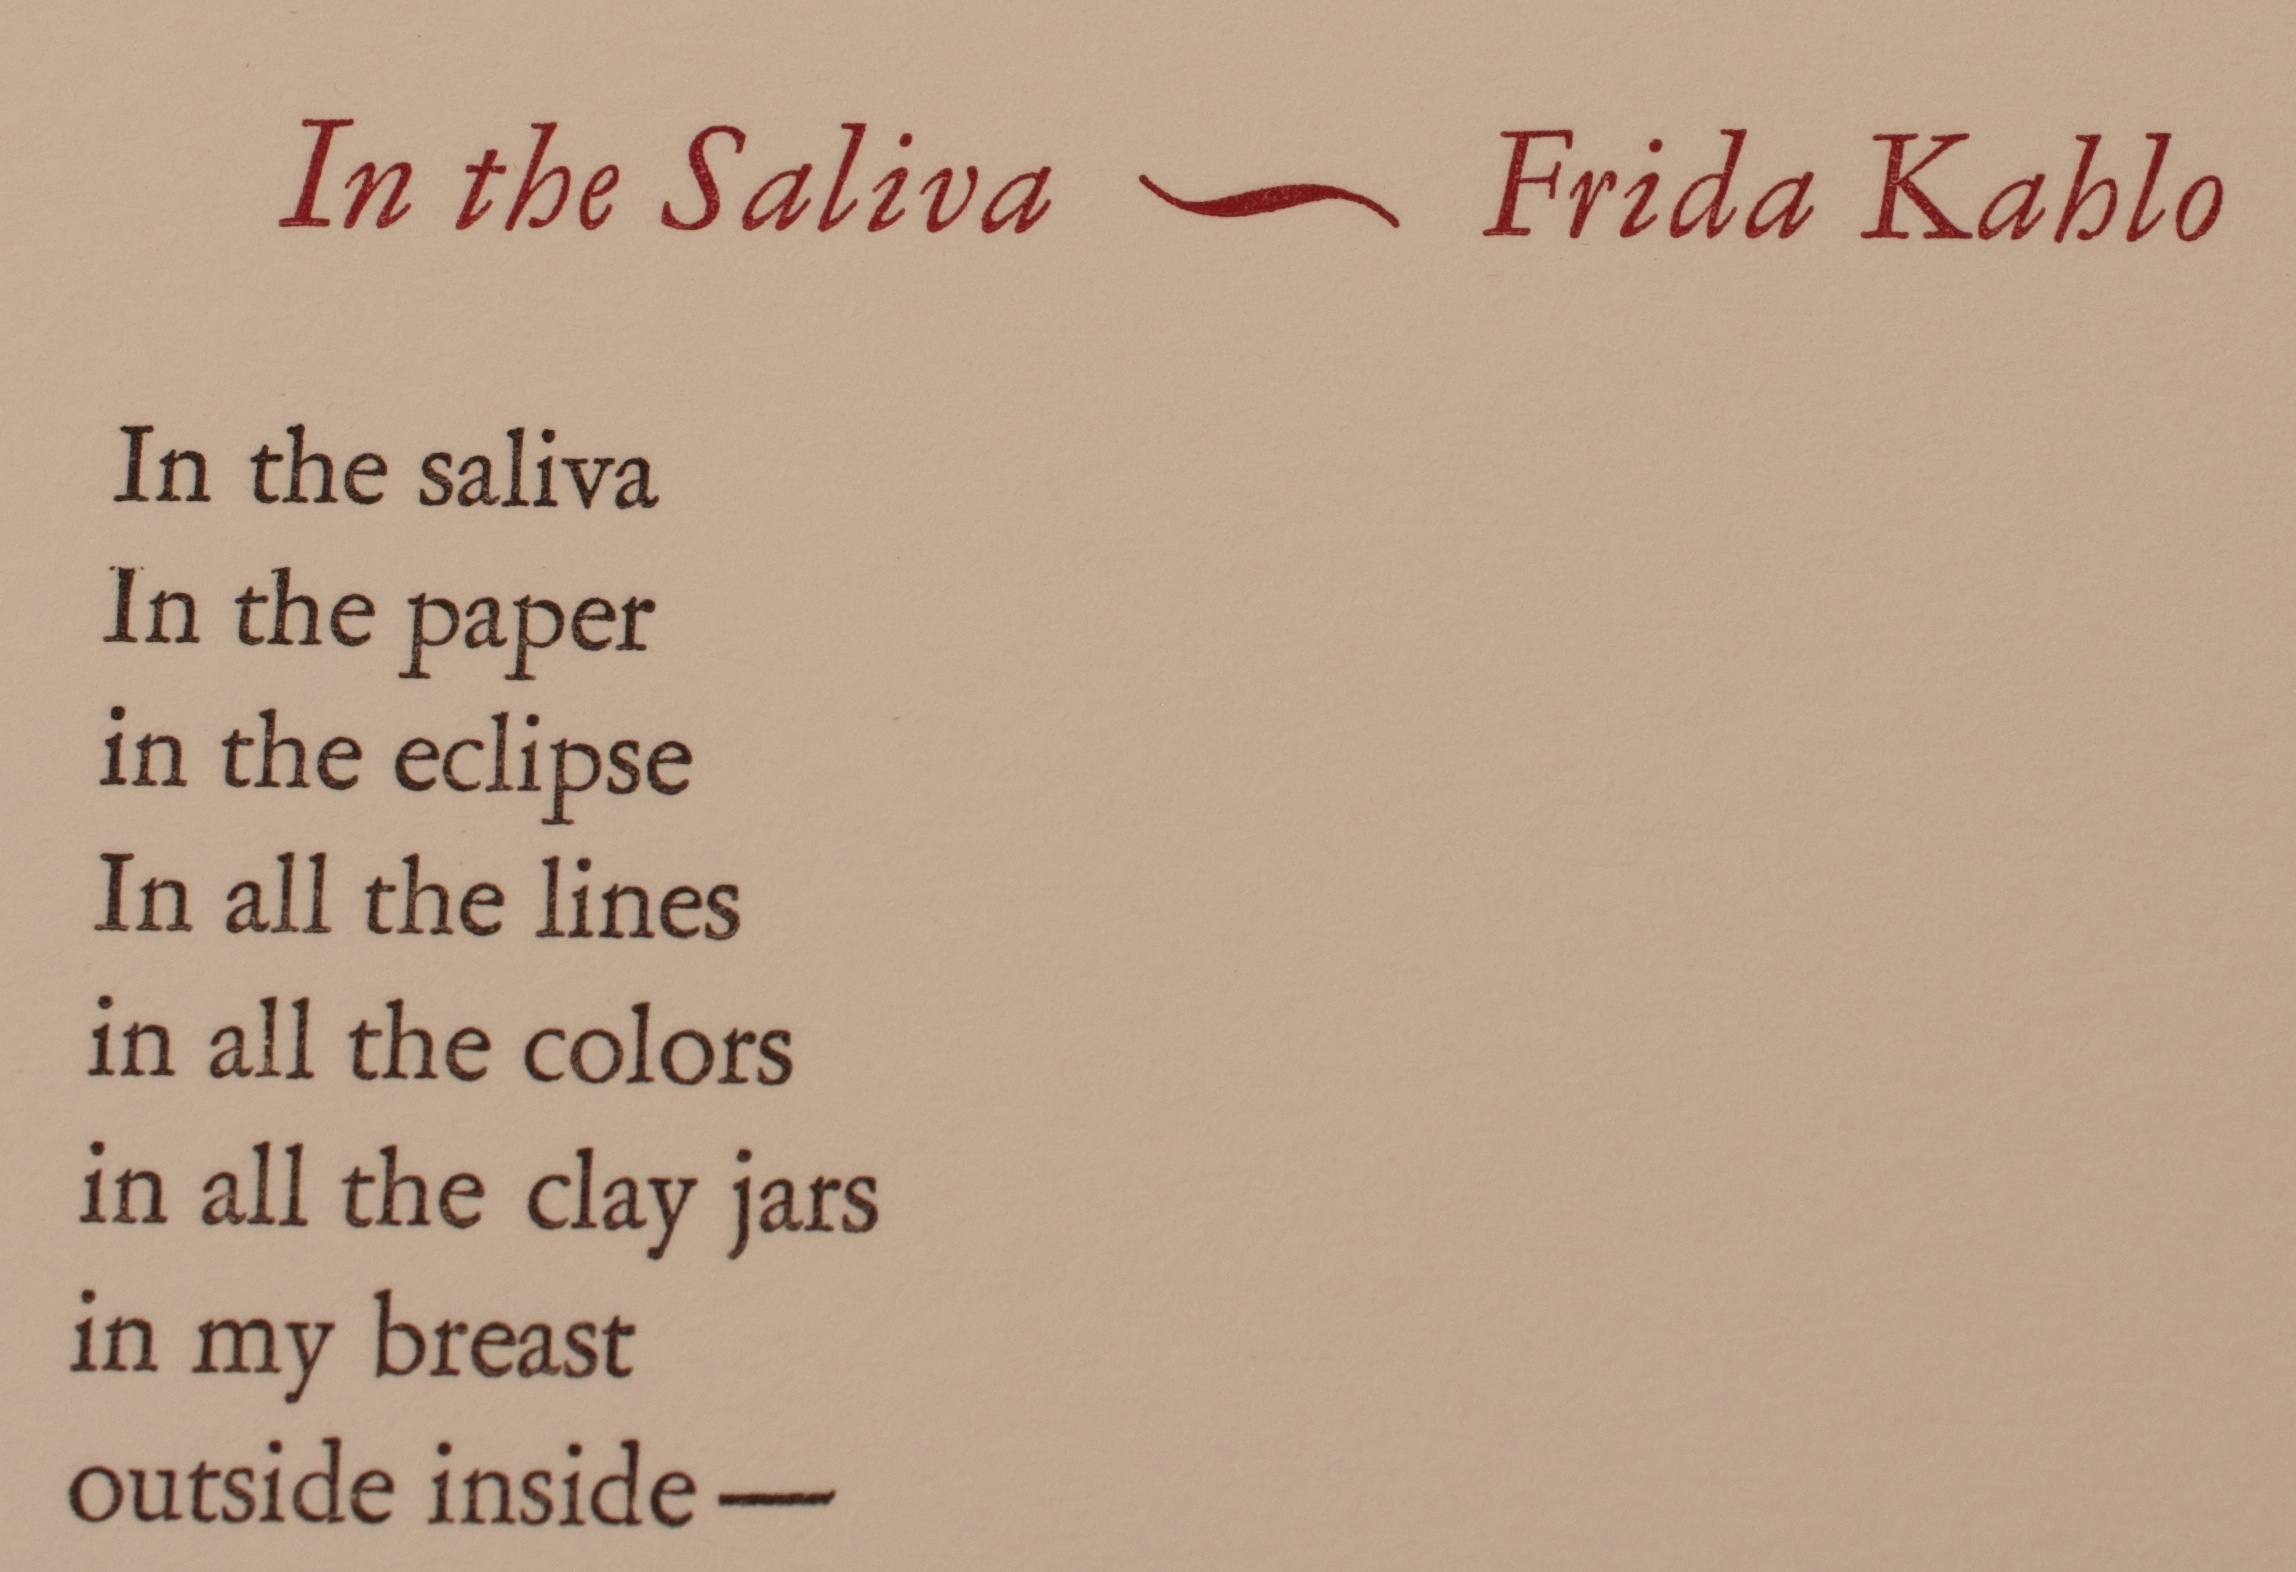 True Love Poems For Him From The Heart I've always loved frida kahlo,